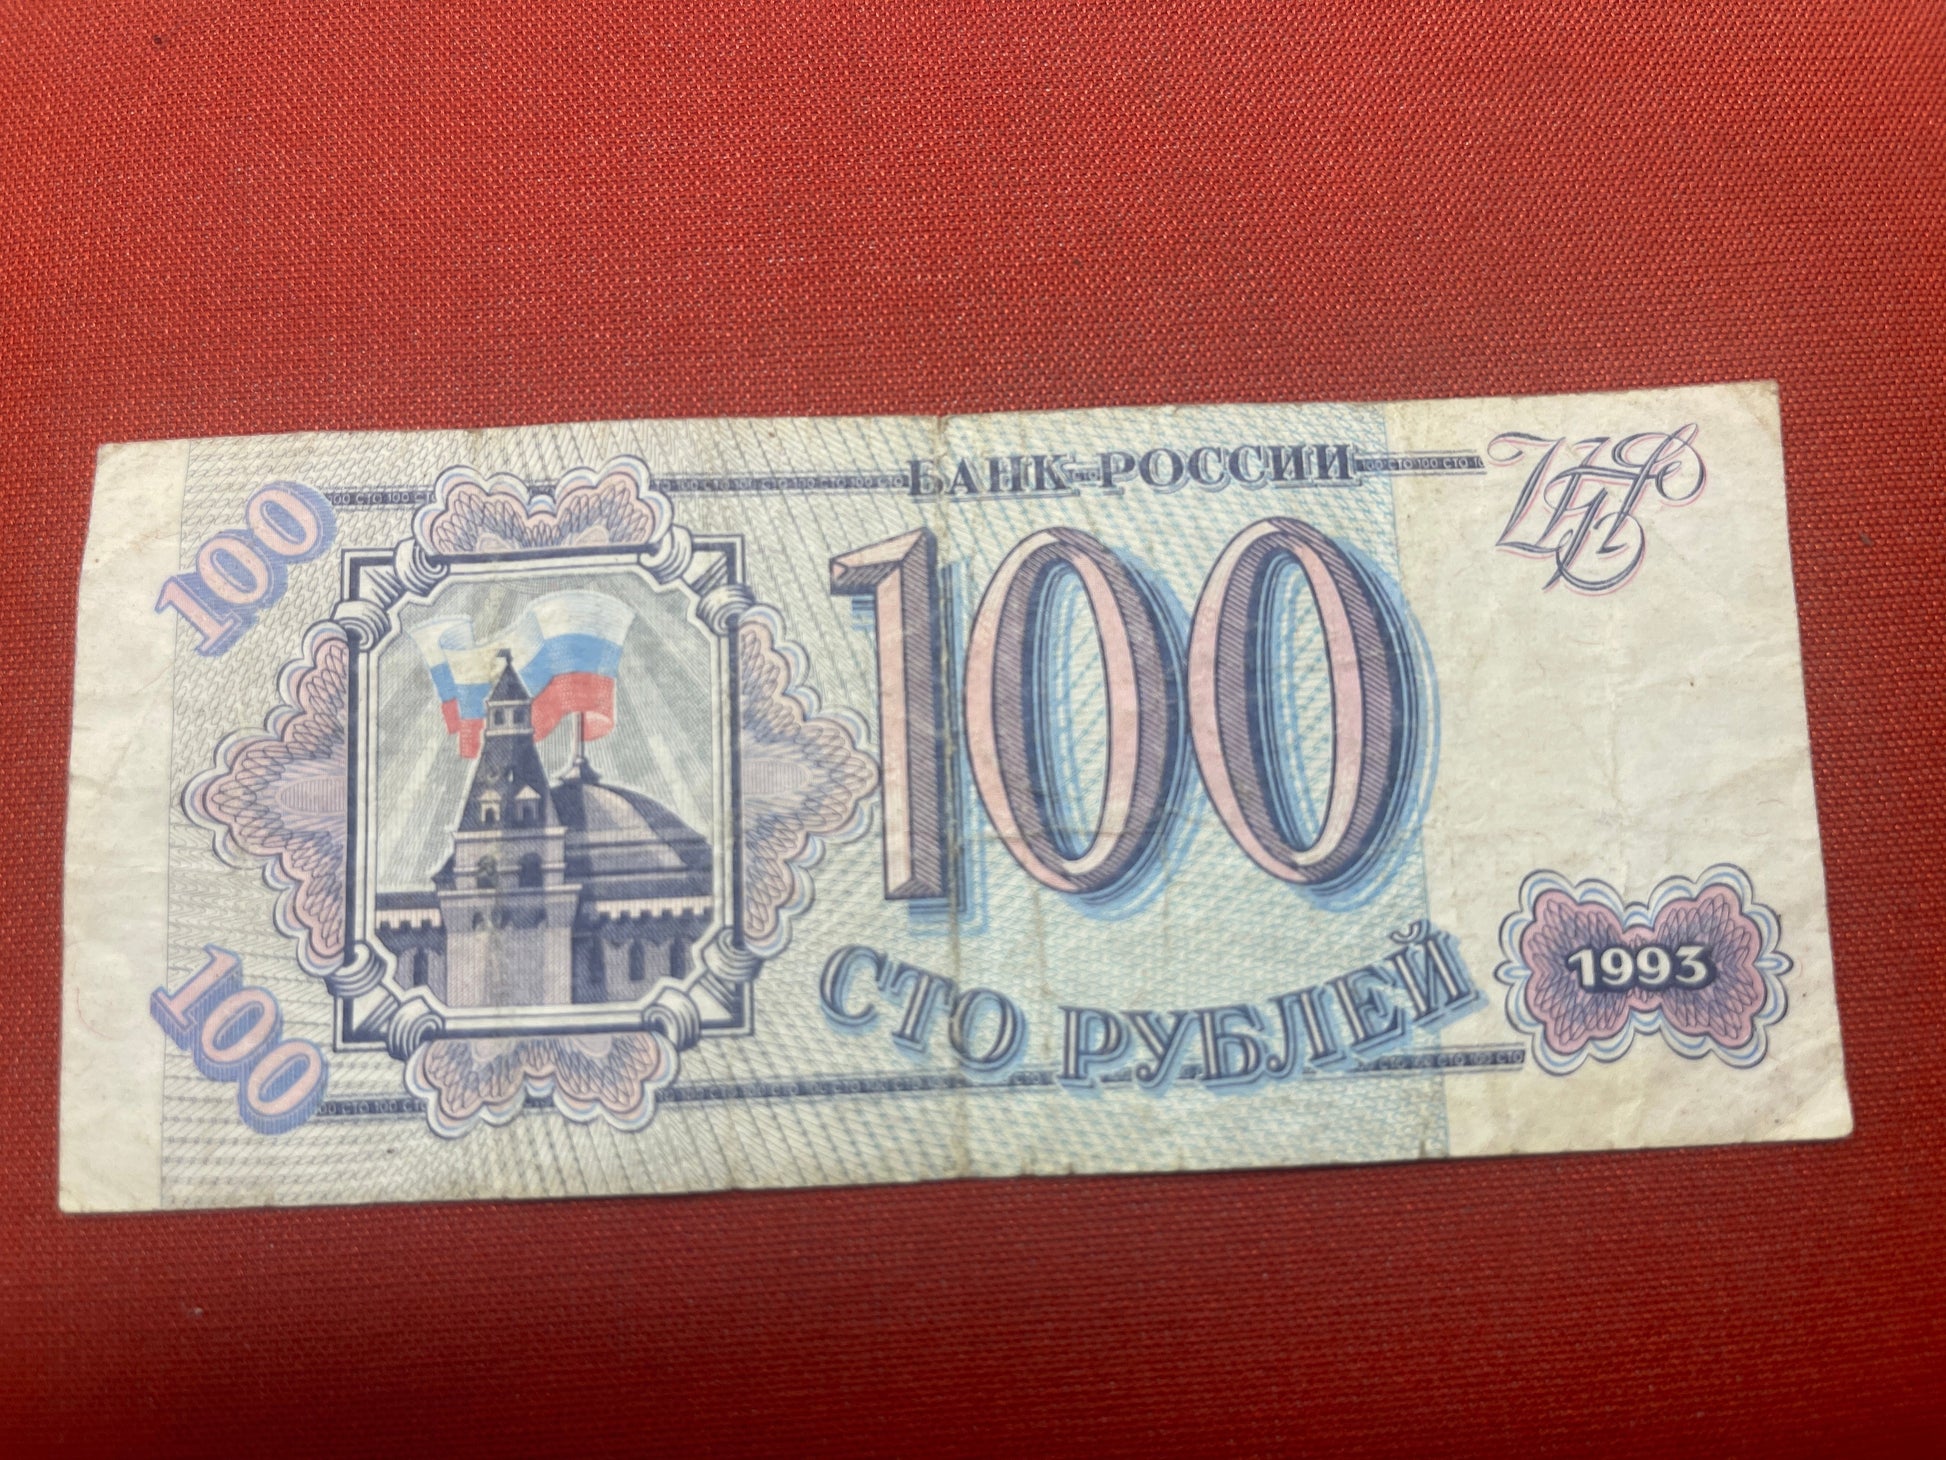 Tricolour flag over stylized Kremlin at left, monogram at upper right. Blue-black on pink and light blue underprint.